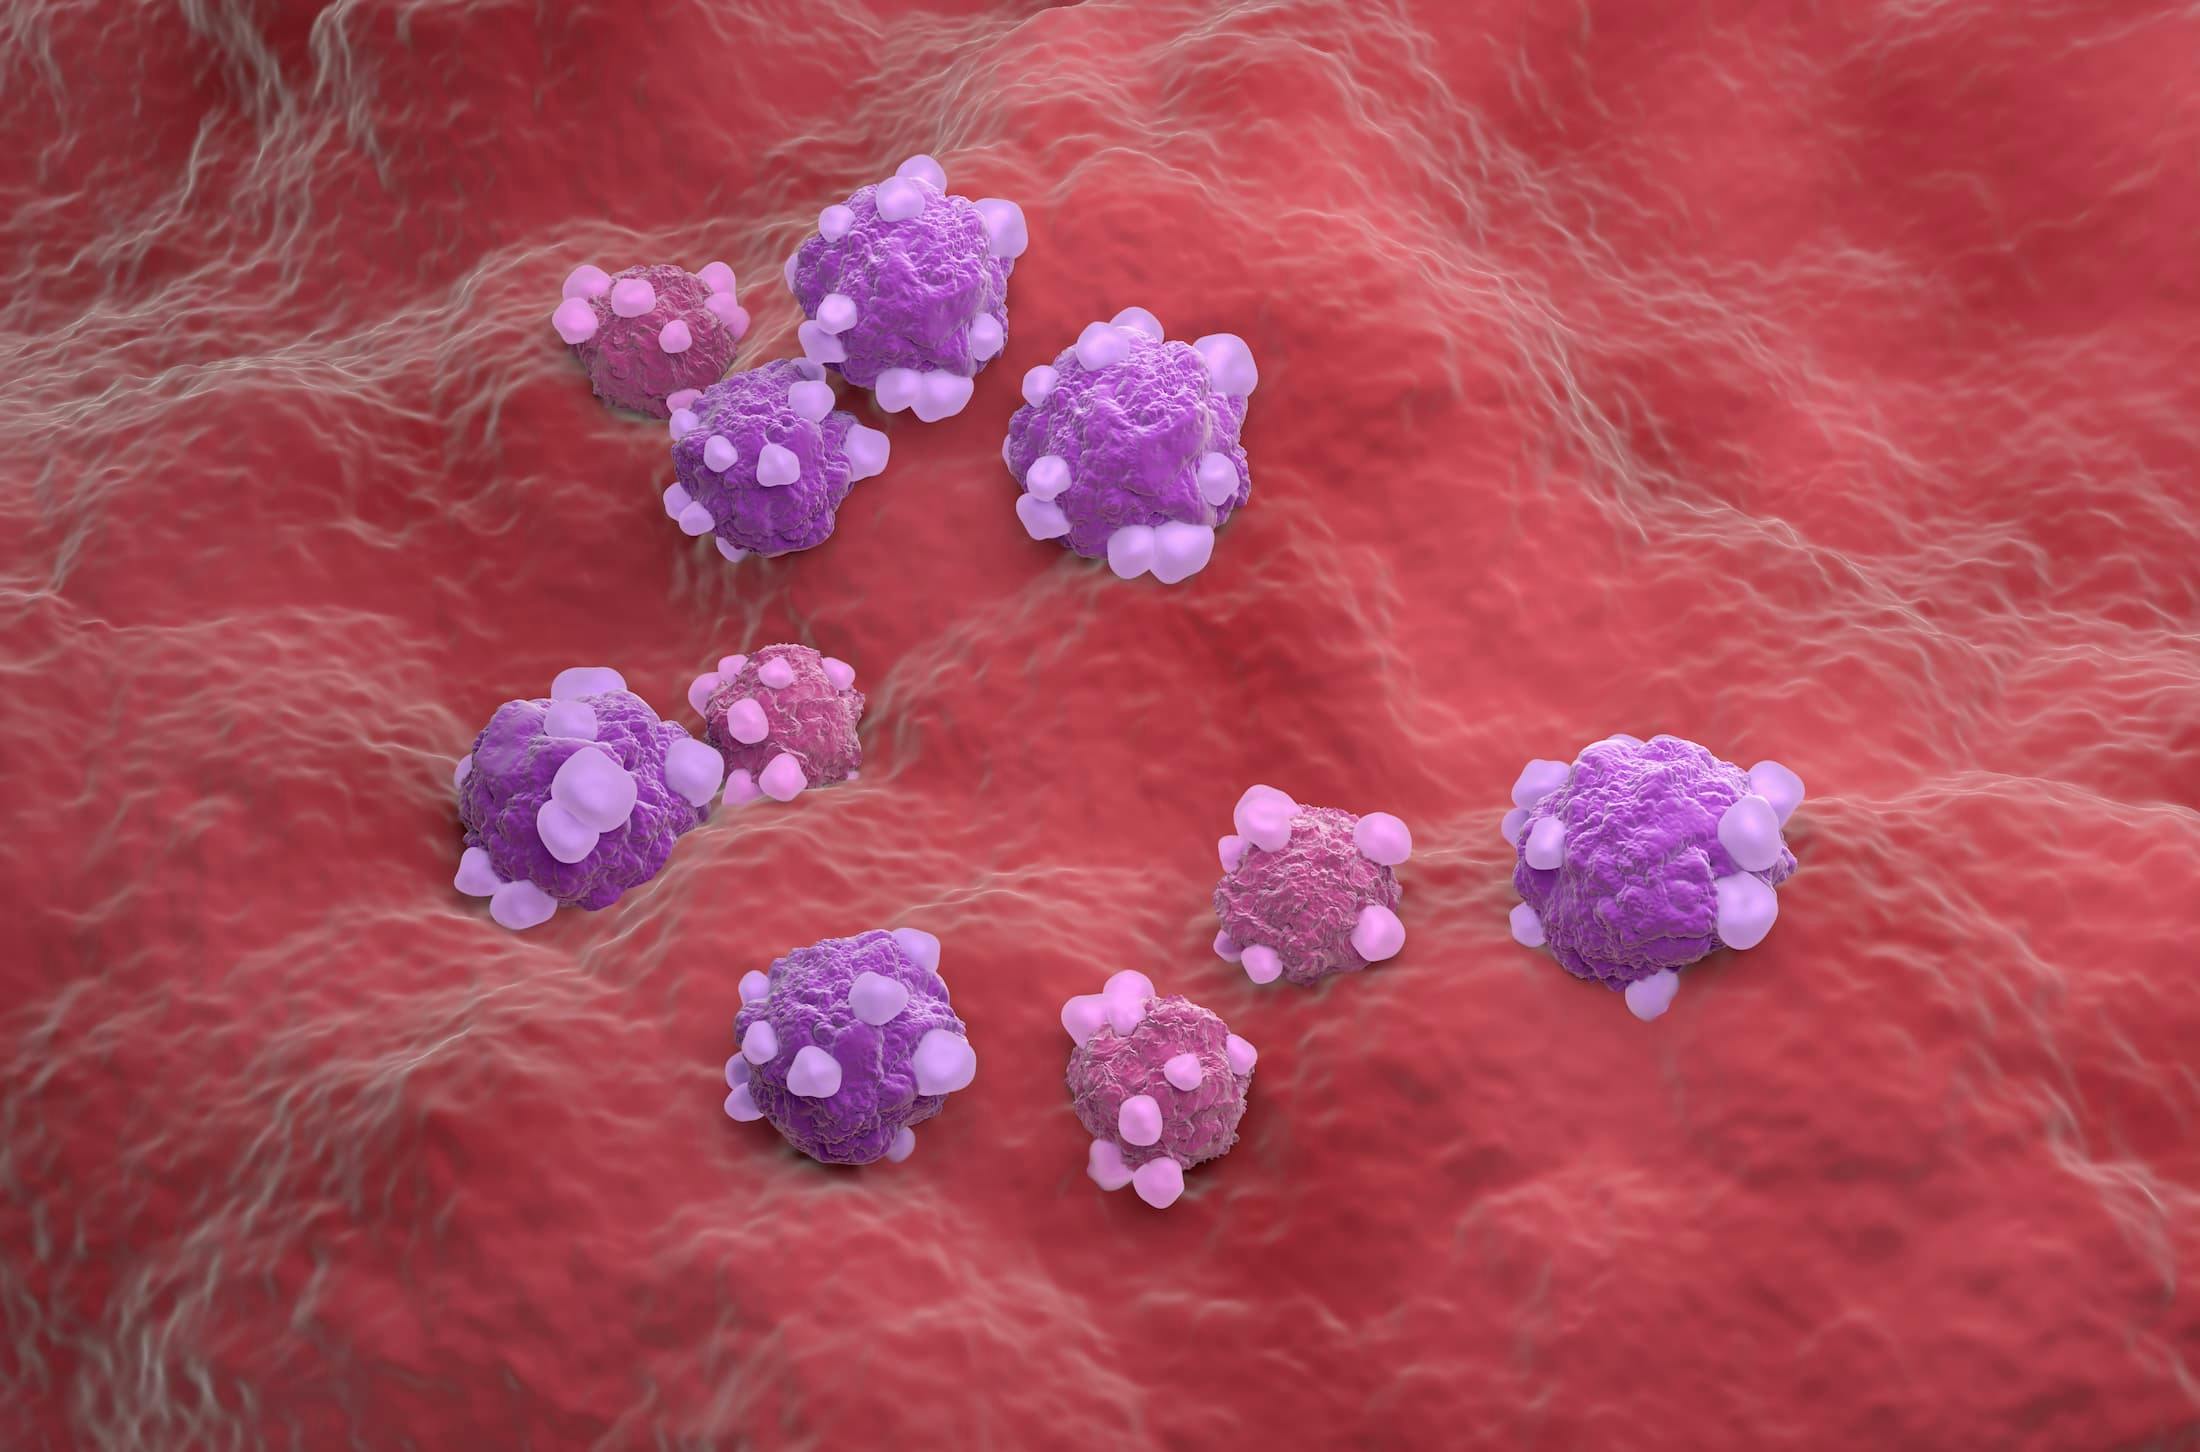 ovarian cancer cell Image credit: © LASZLO via Adobe Stock